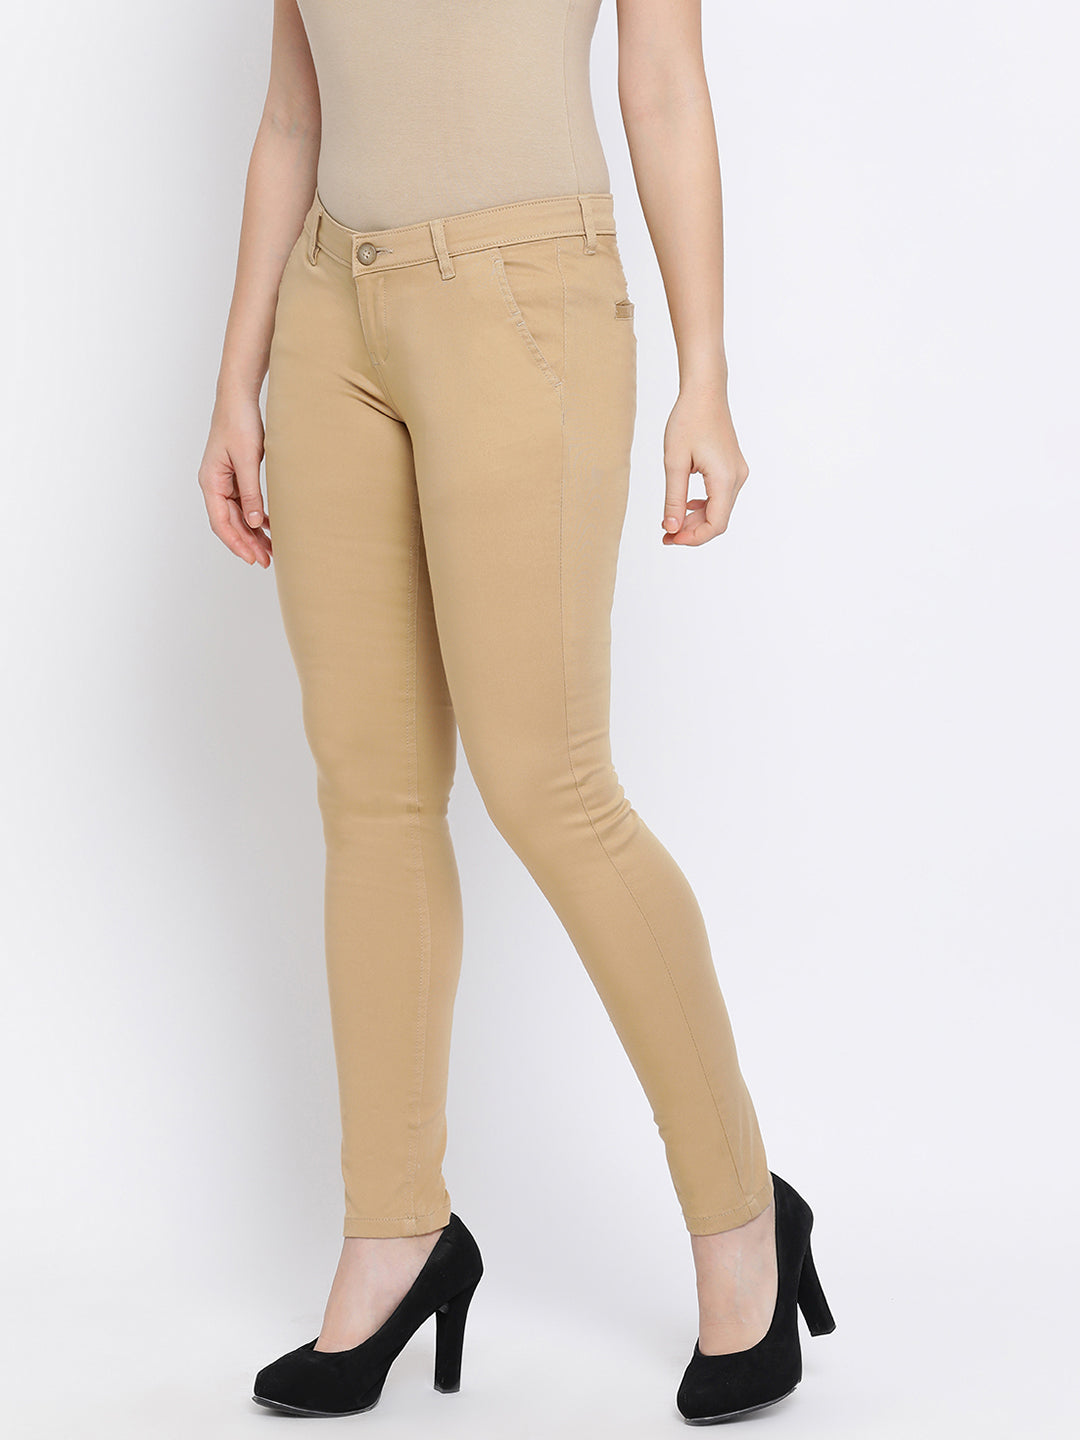 Khaki Denim Slim fit Trousers - Women Trousers